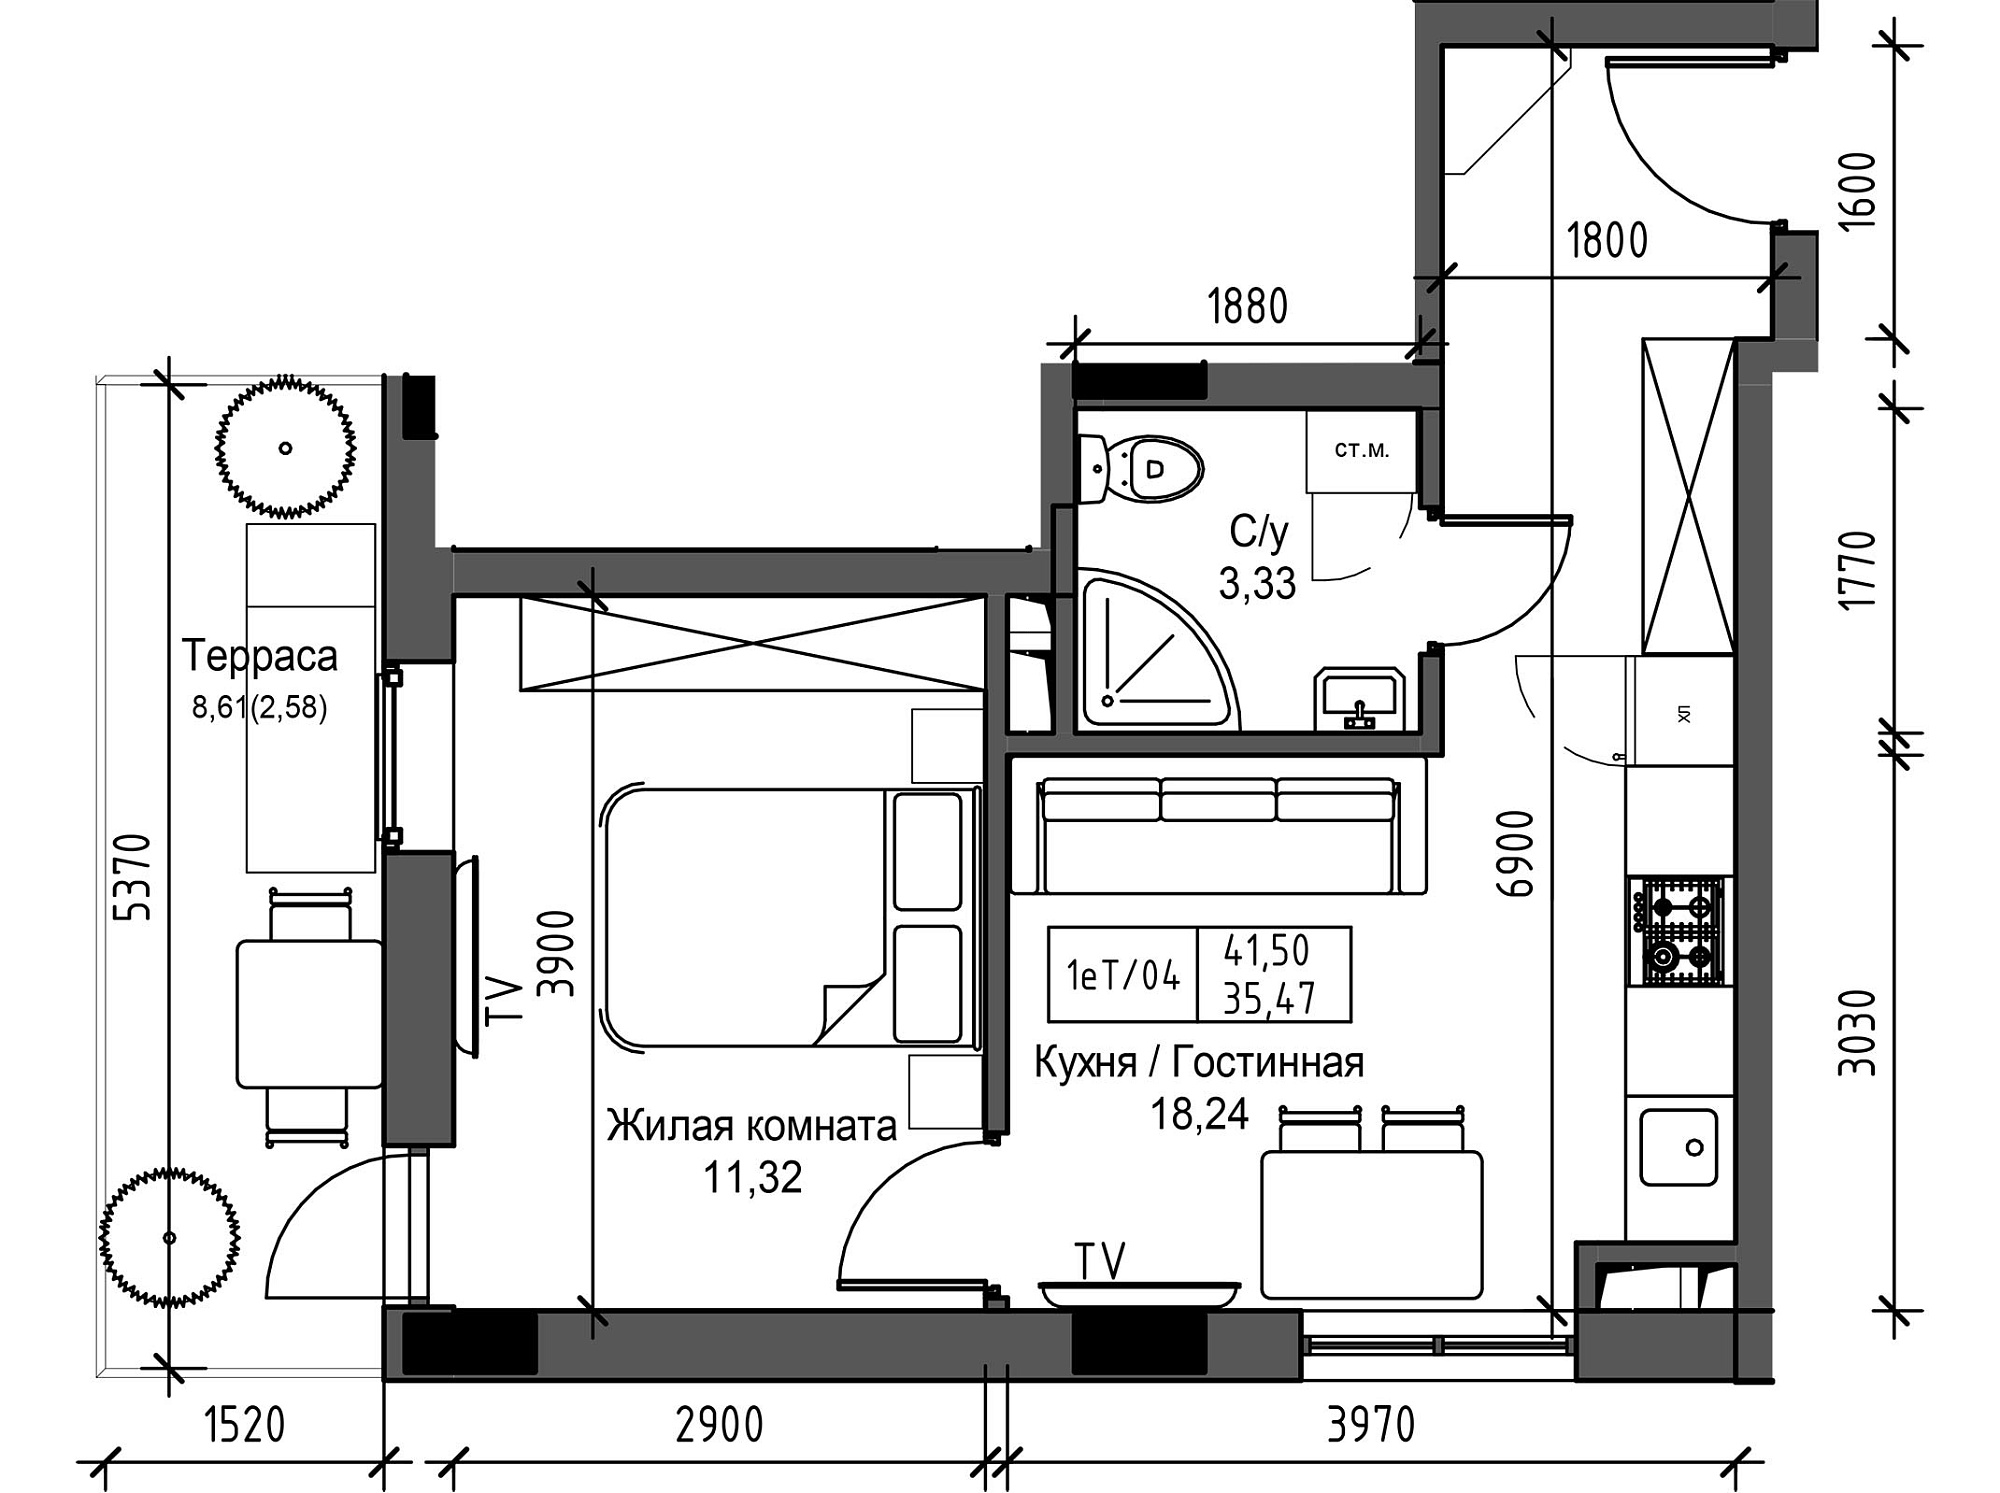 Планування 1-к квартира площею 35.47м2, UM-003-07/0073.